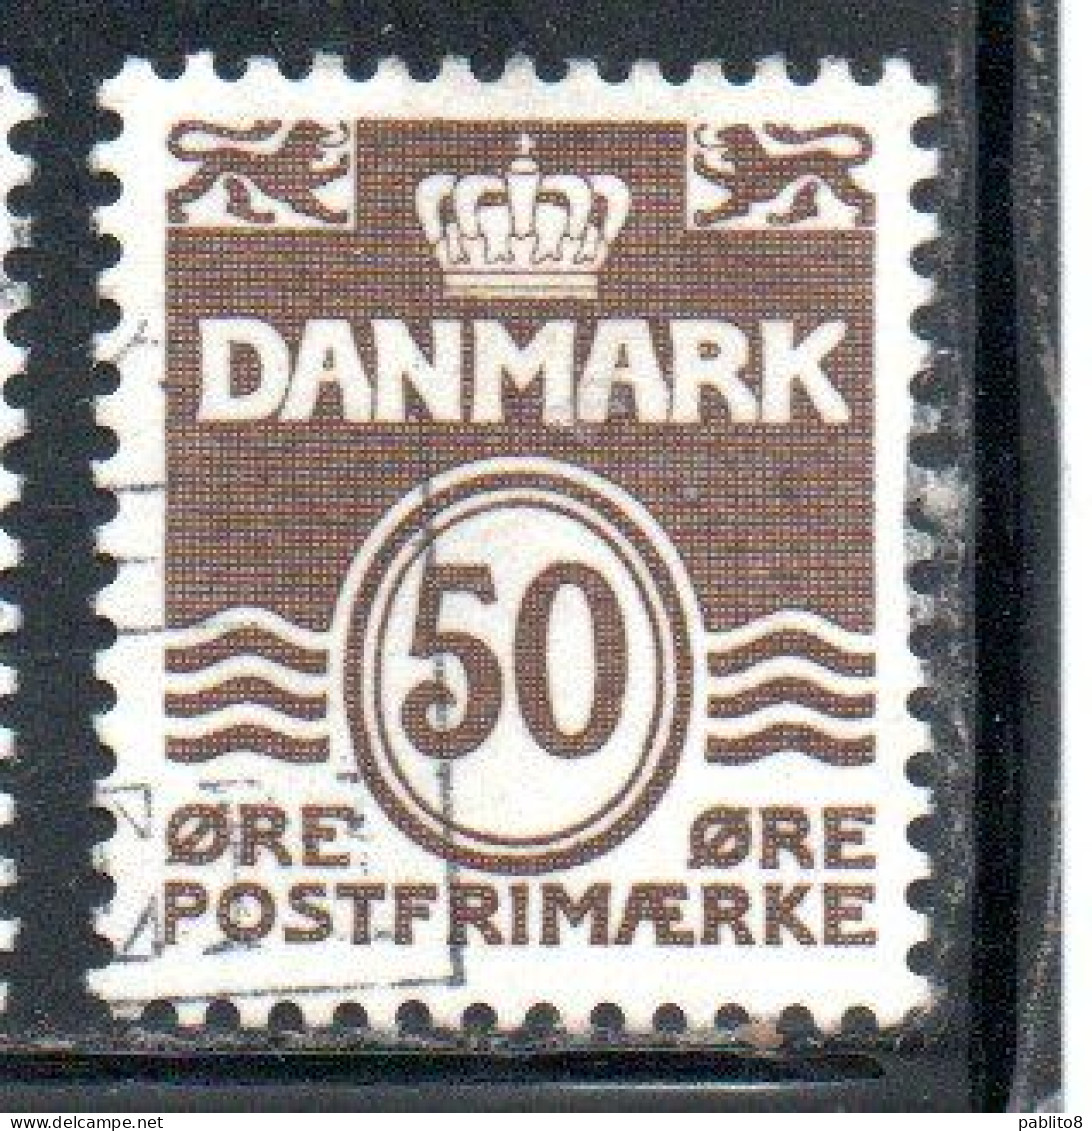 DANEMARK DANMARK DENMARK DANIMARCA 1973 1974 WAVY LINES AND NUMERAL OF VALUE 50o USED USATO OBLITERE' - Used Stamps